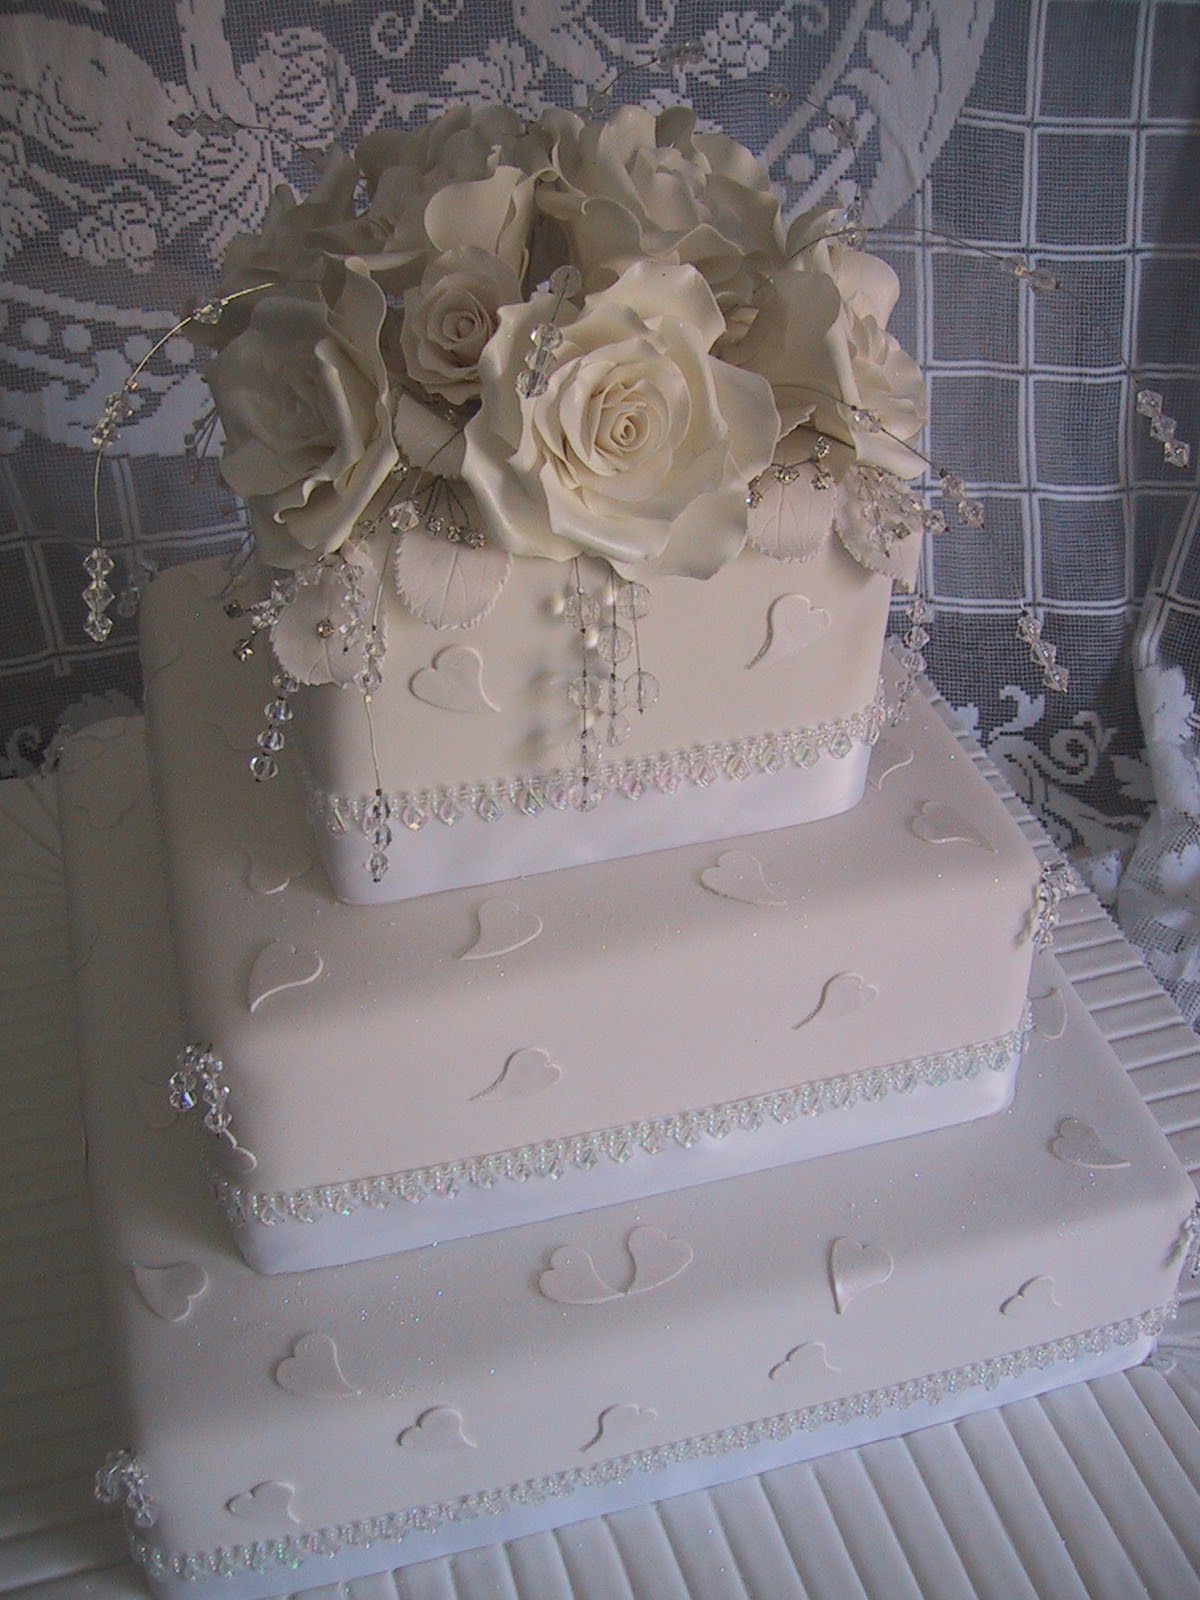 My beautiful wedding cake